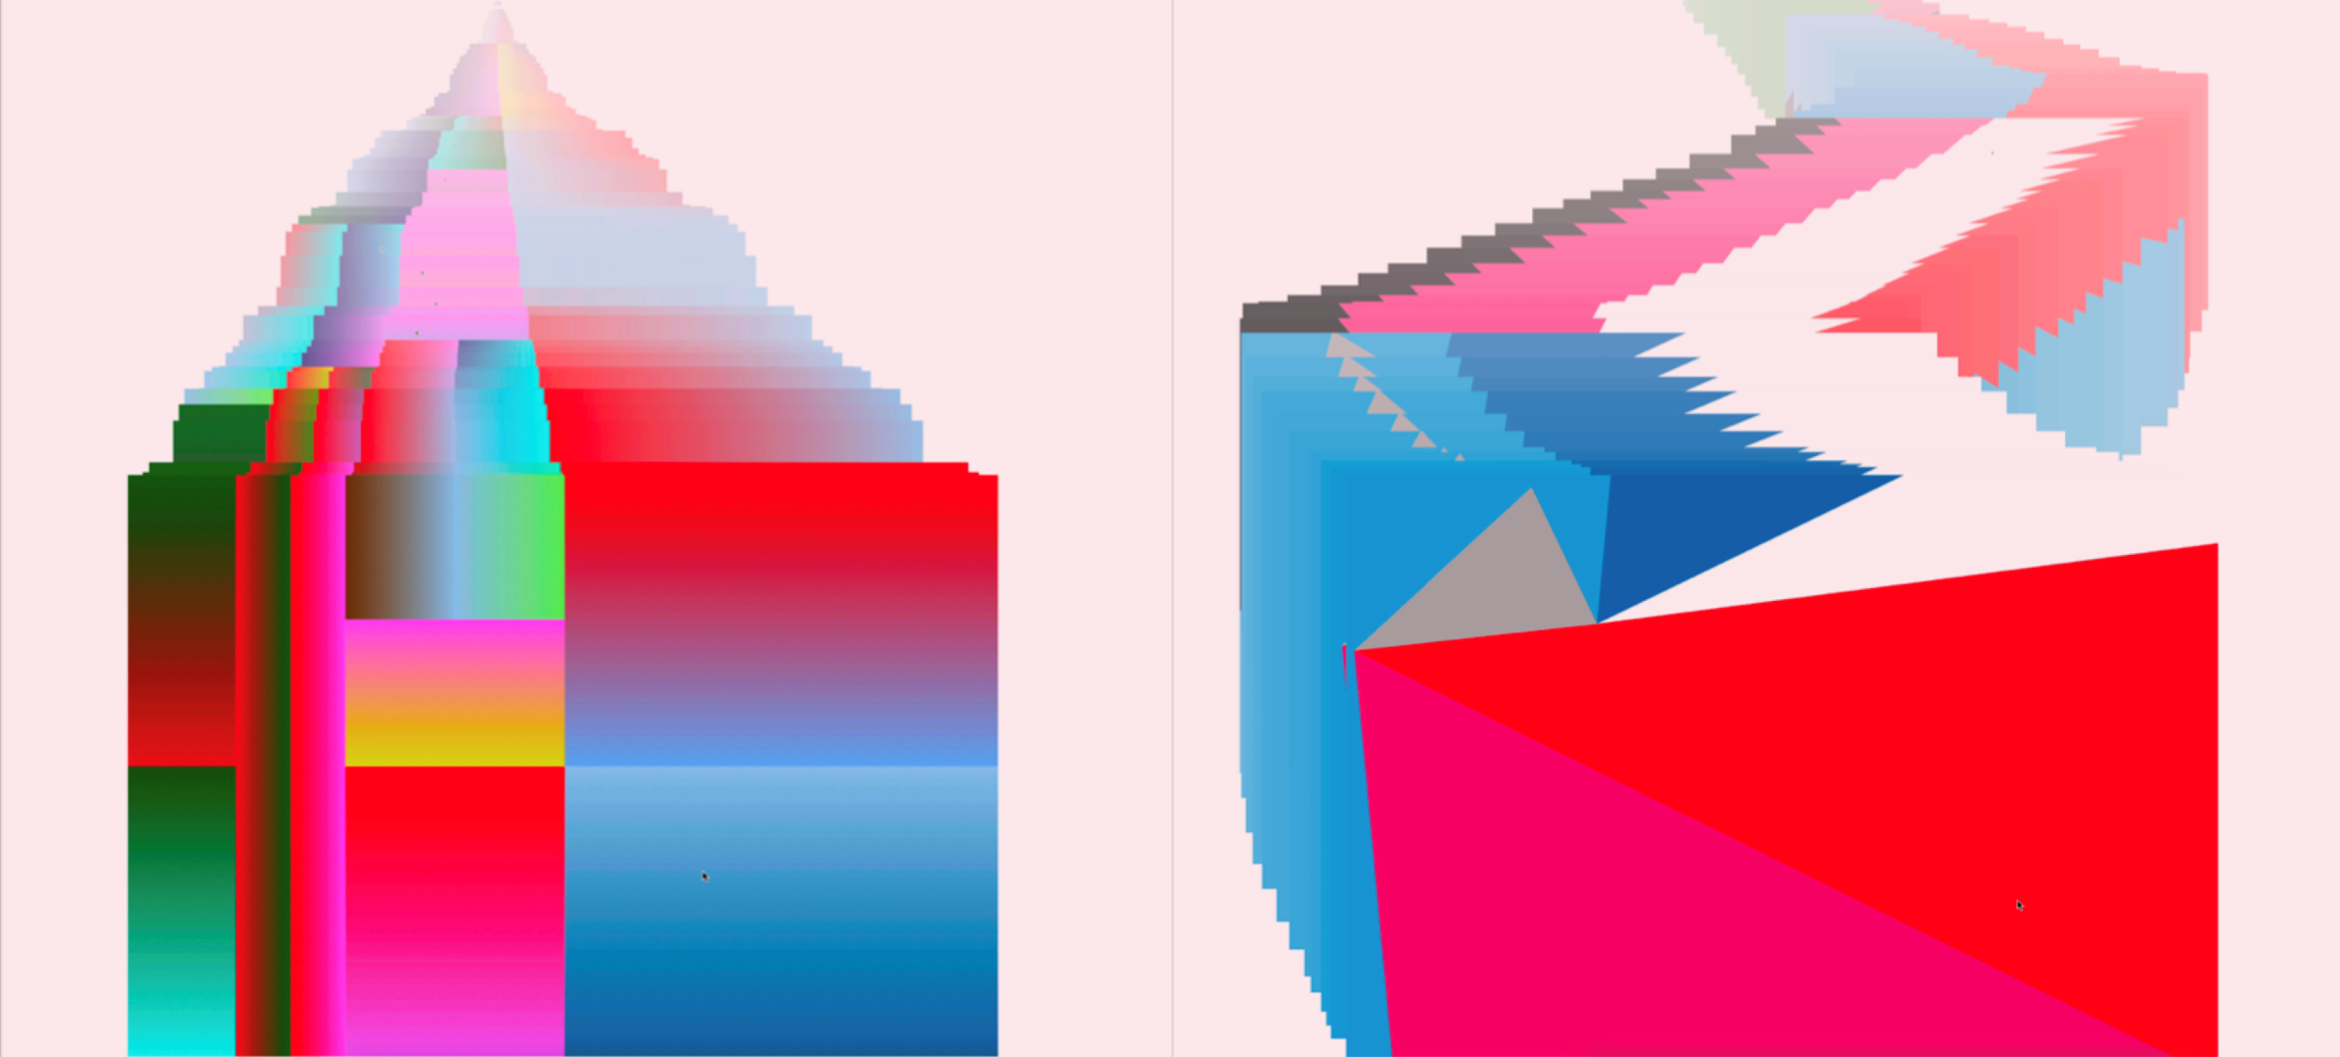 Uit Marijkes proefschrift Fast, Fluid, Fragmented: Art and Design in the Digital Age